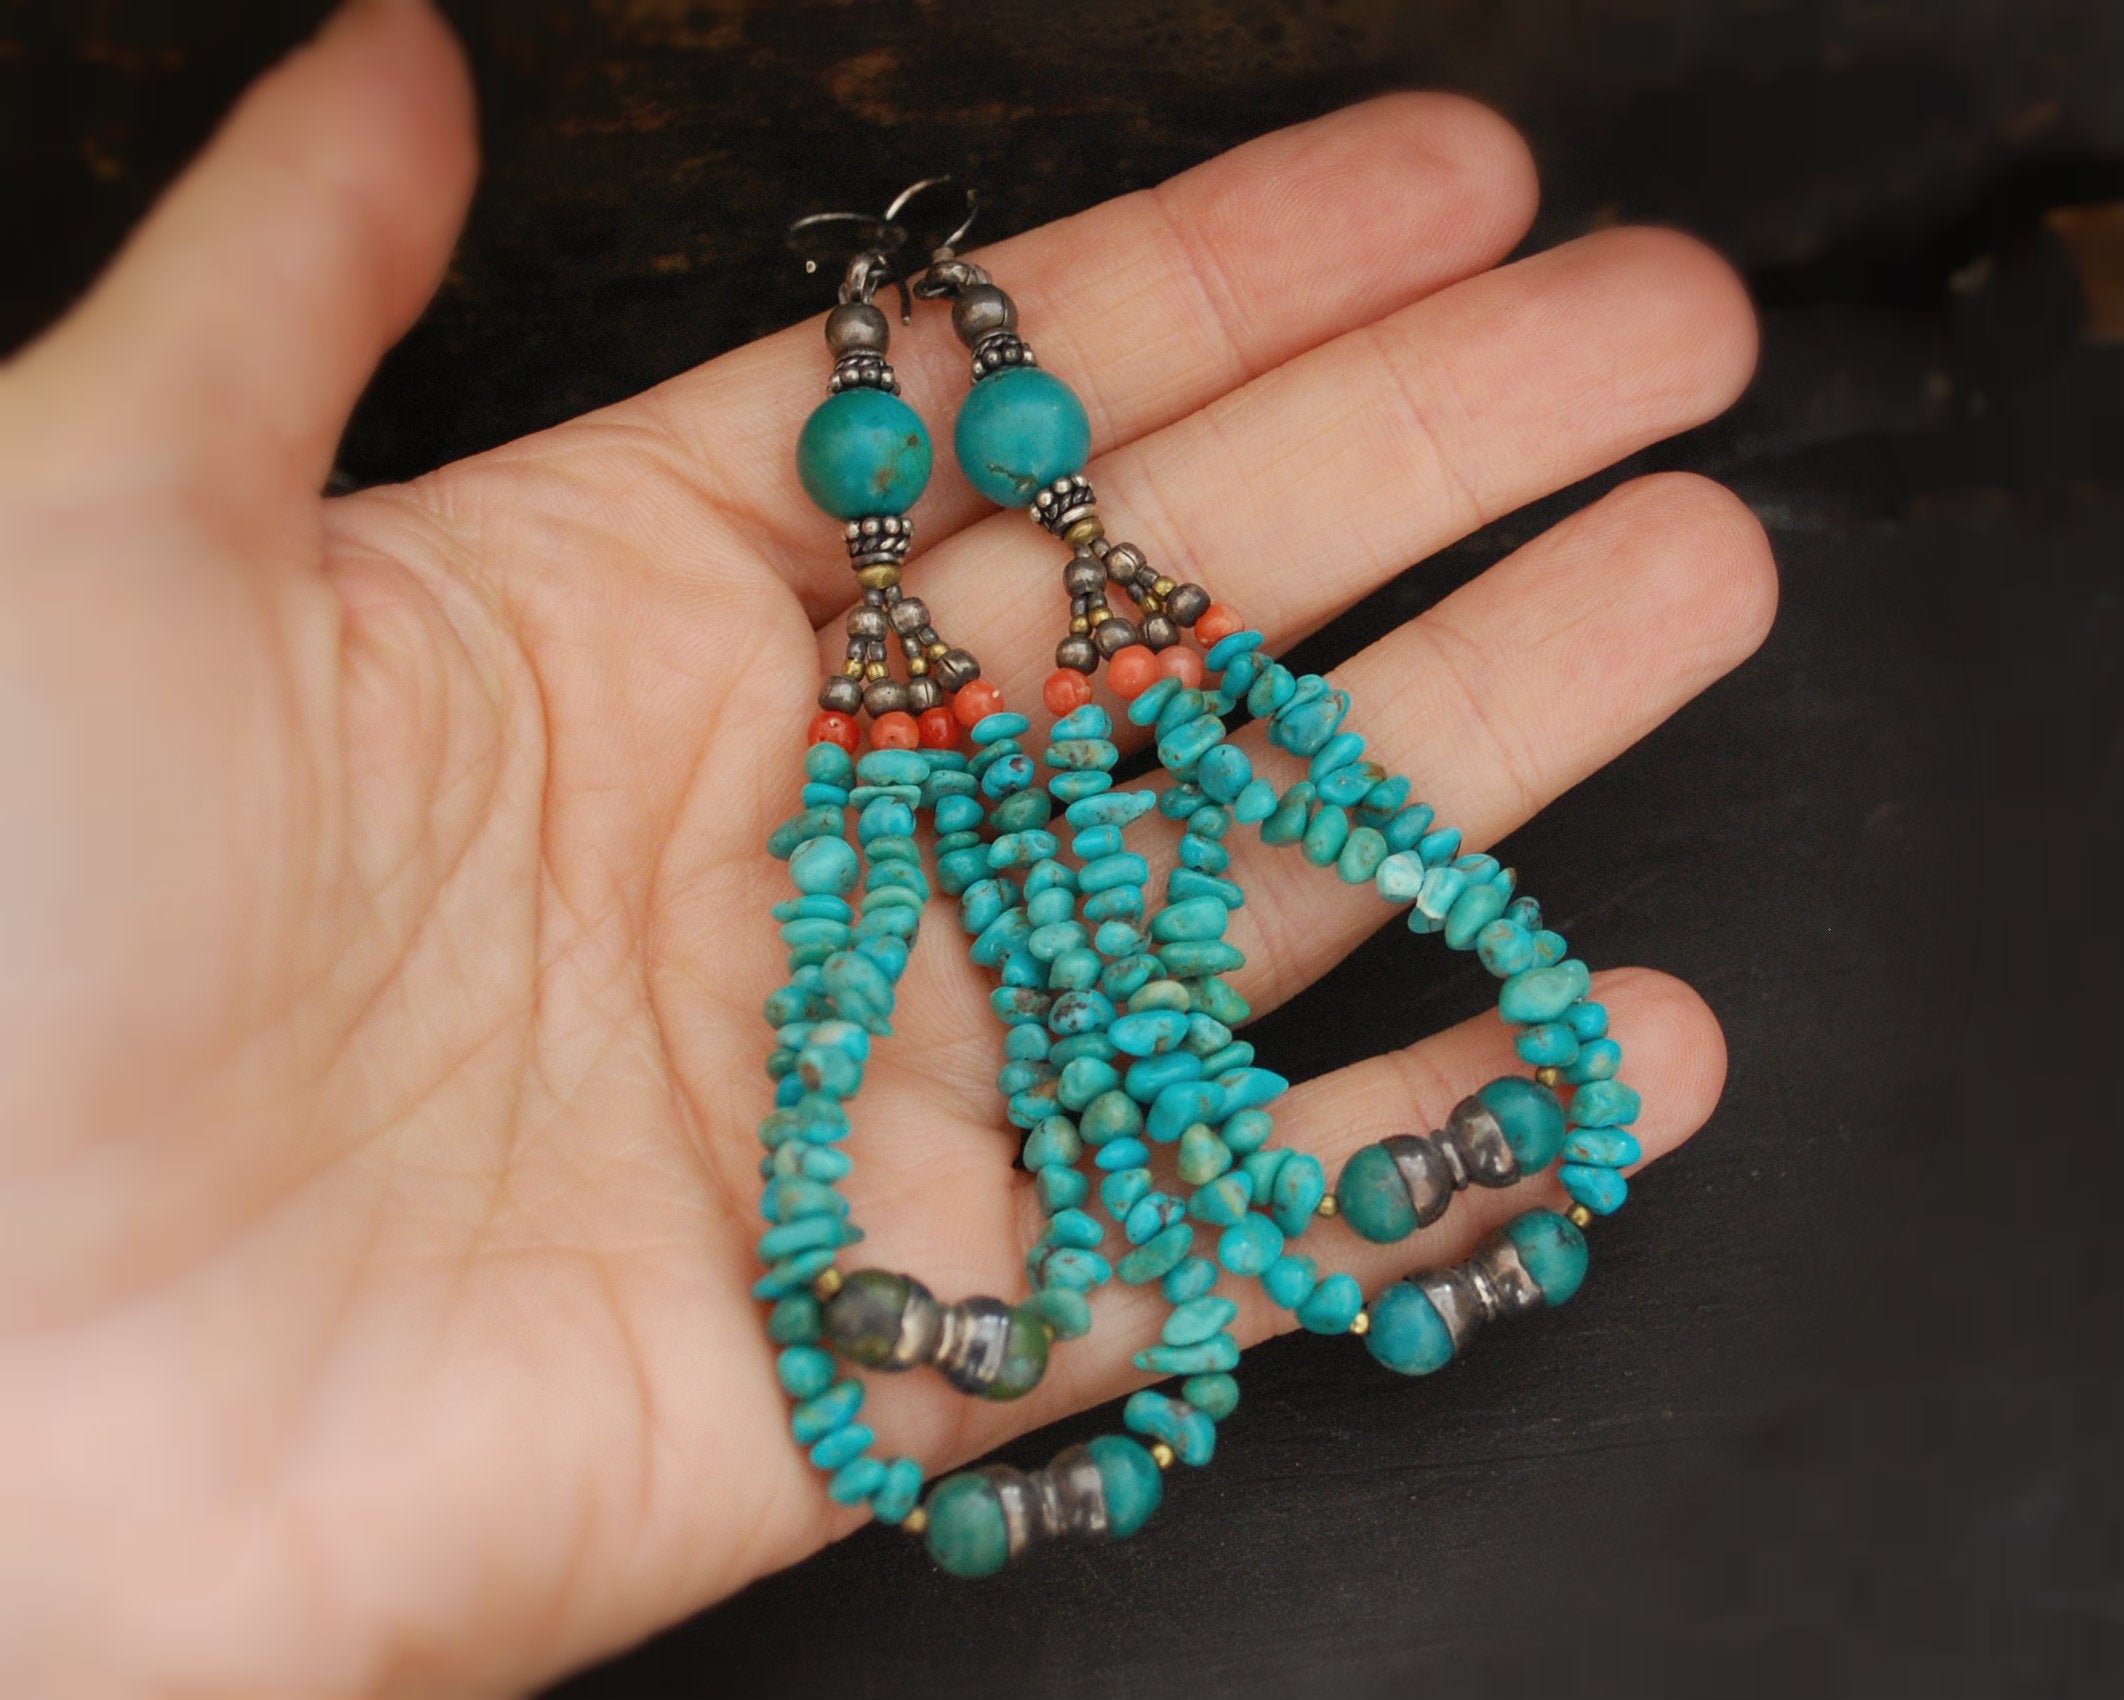 Ethnic Turquoise Coral Earrings